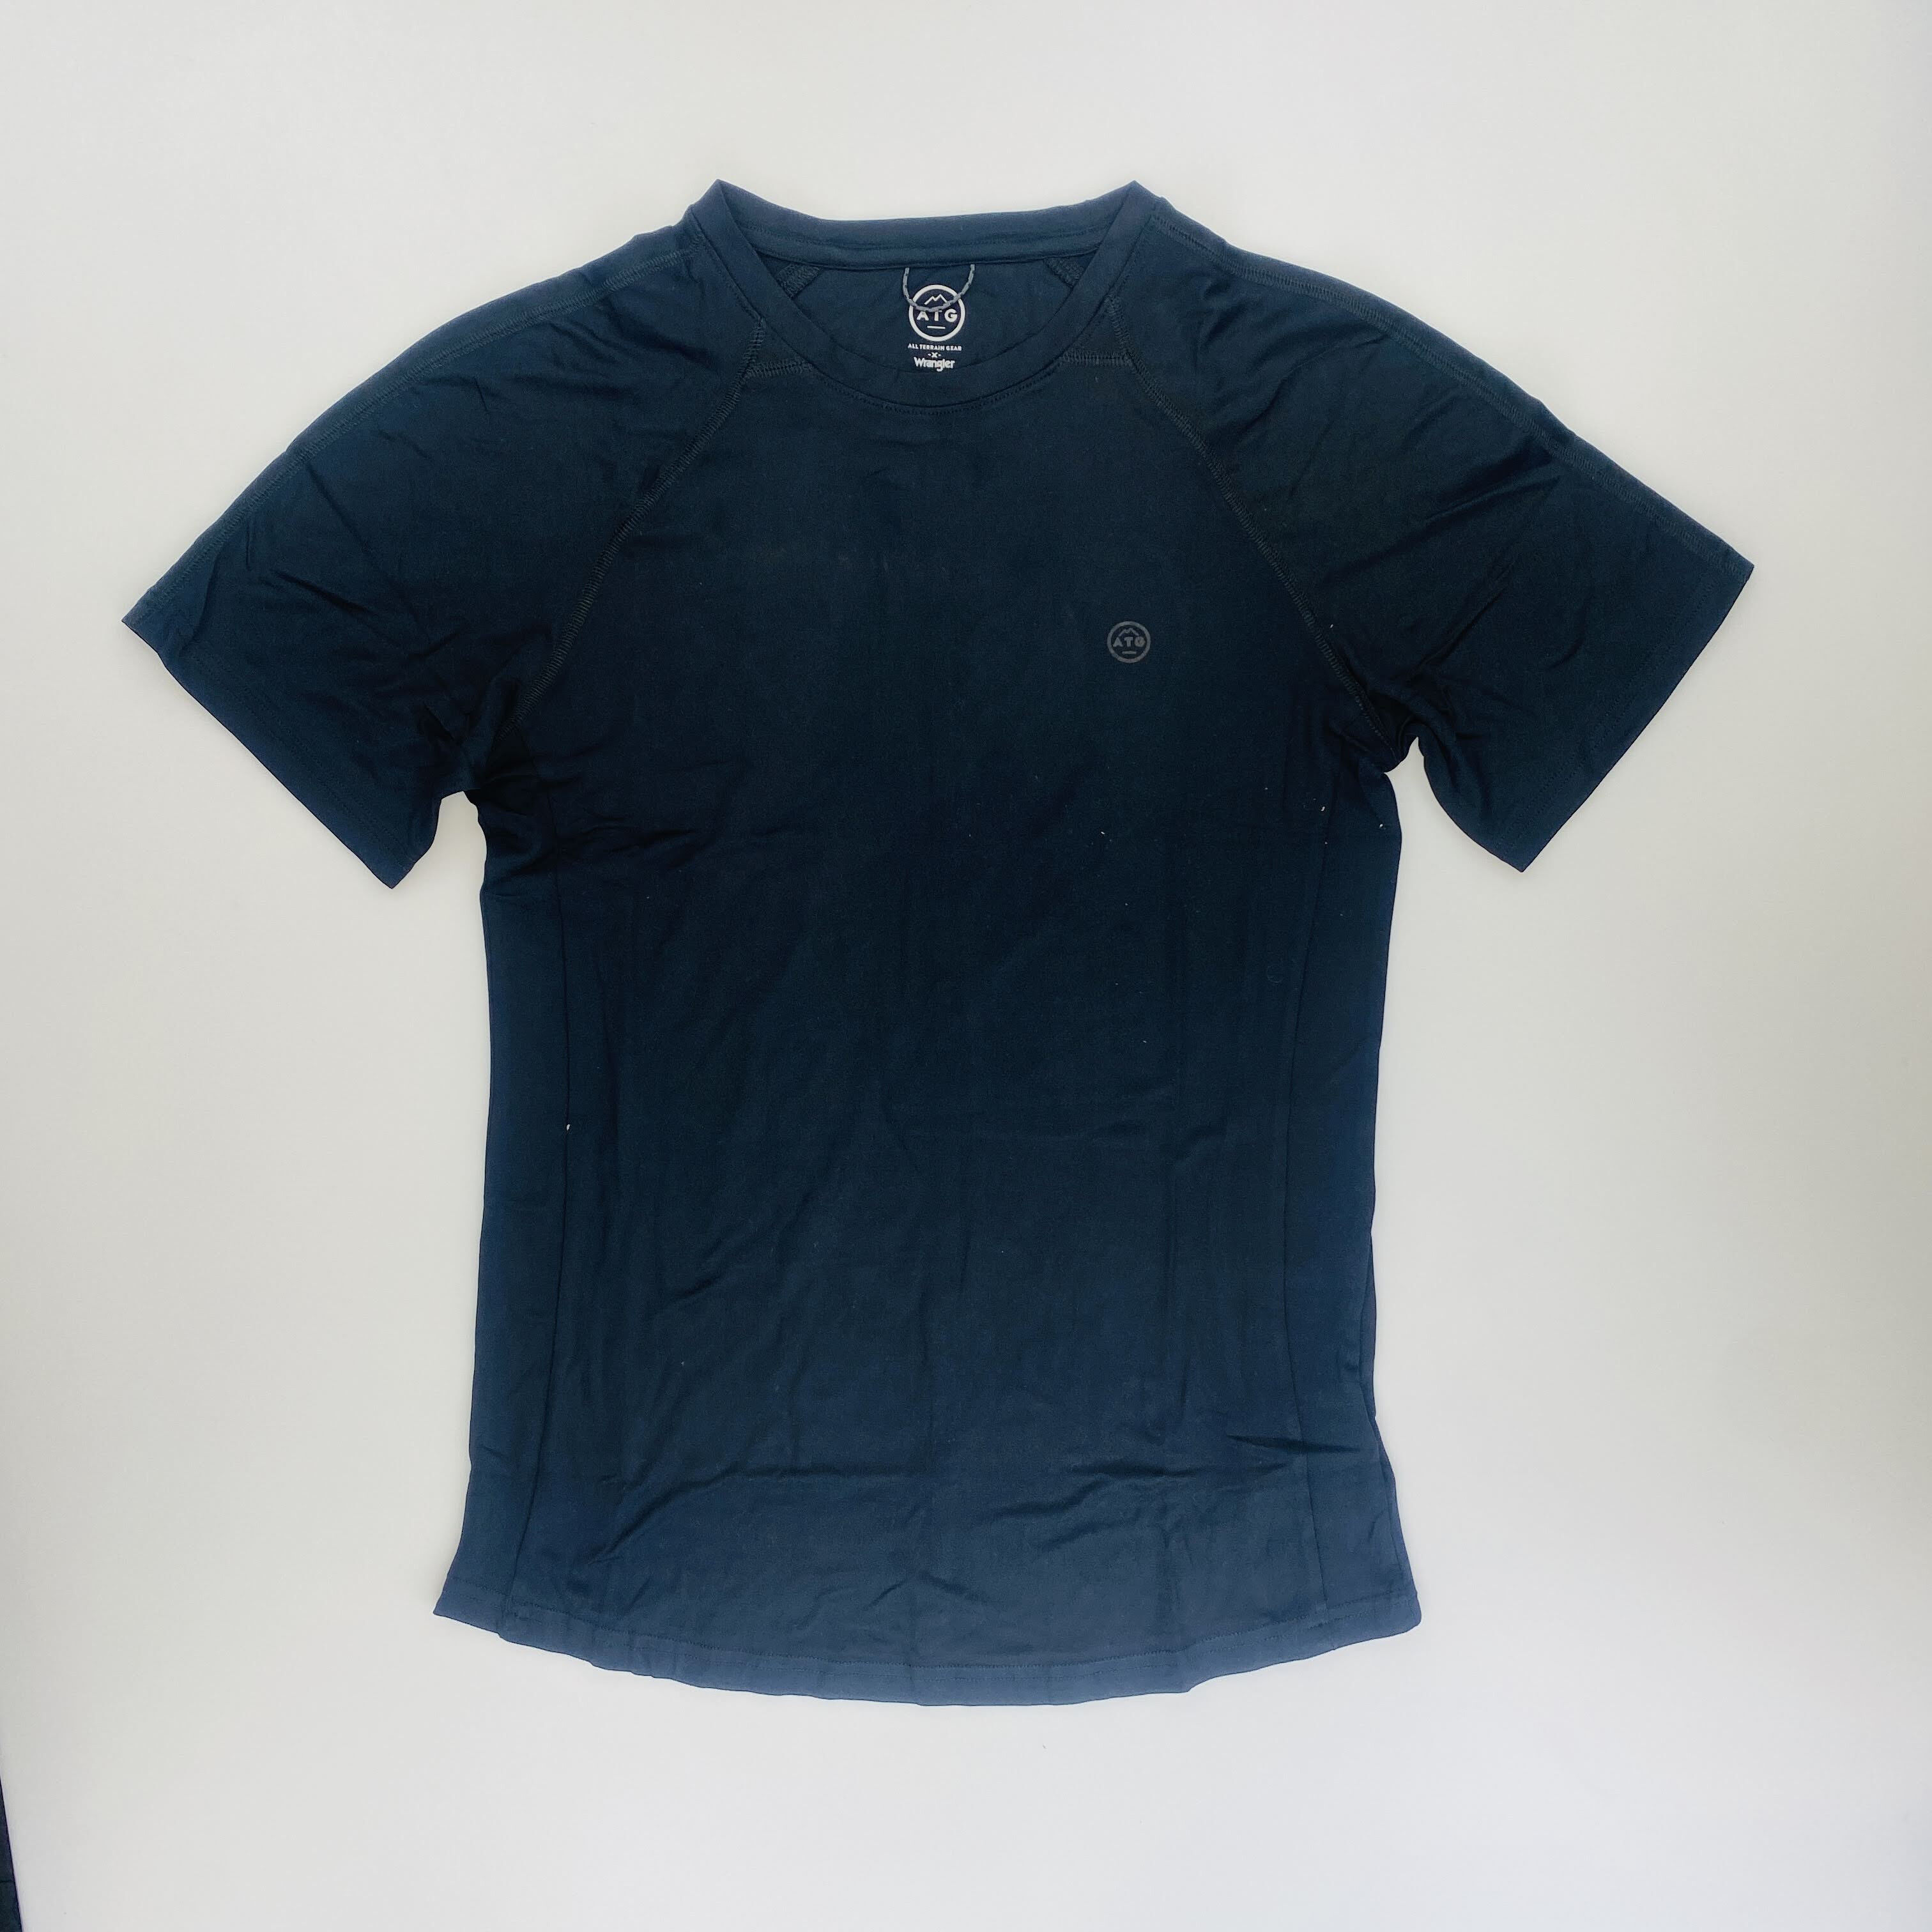 Wrangler Ss Performance T Shirt - T-shirt di seconda mano - Donna - Nero - XS | Hardloop